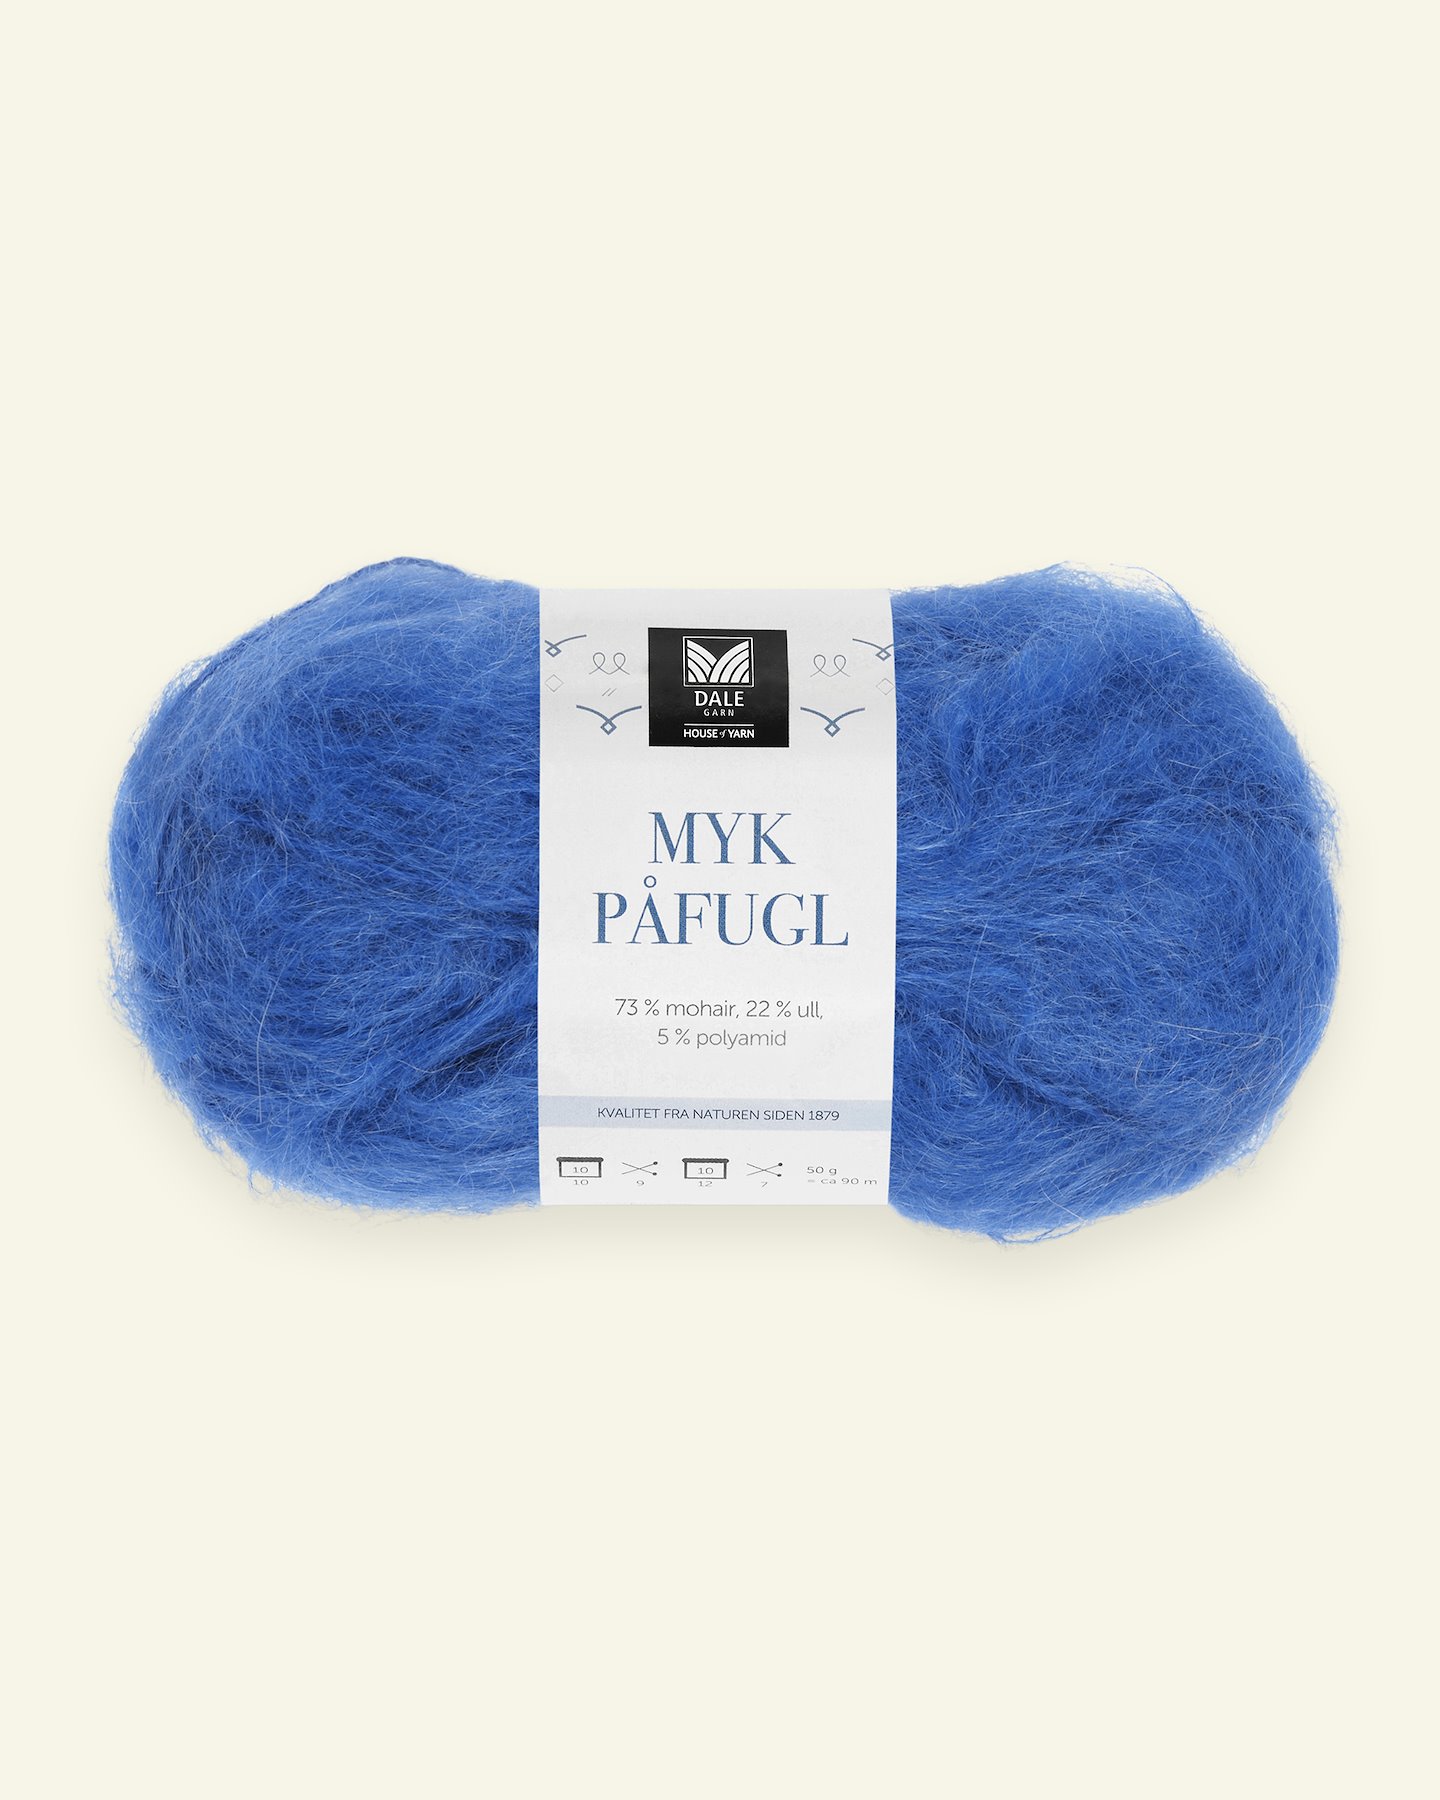 Dale Garn, mohair/wool yarn "Myk Påfugl", cobolt 90000239_pack